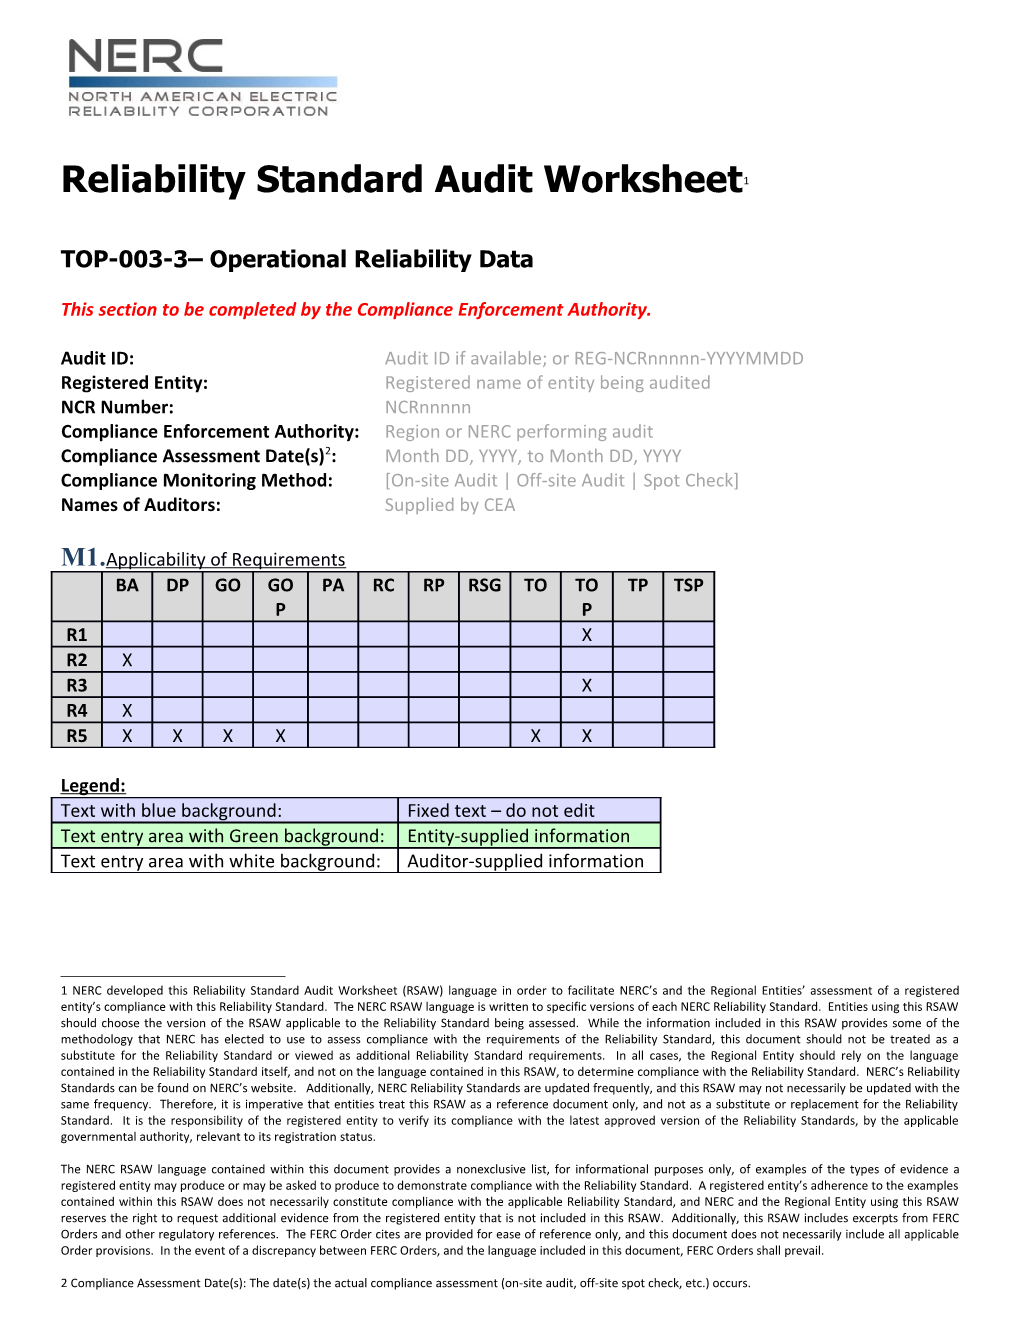 Operational Reliability Data